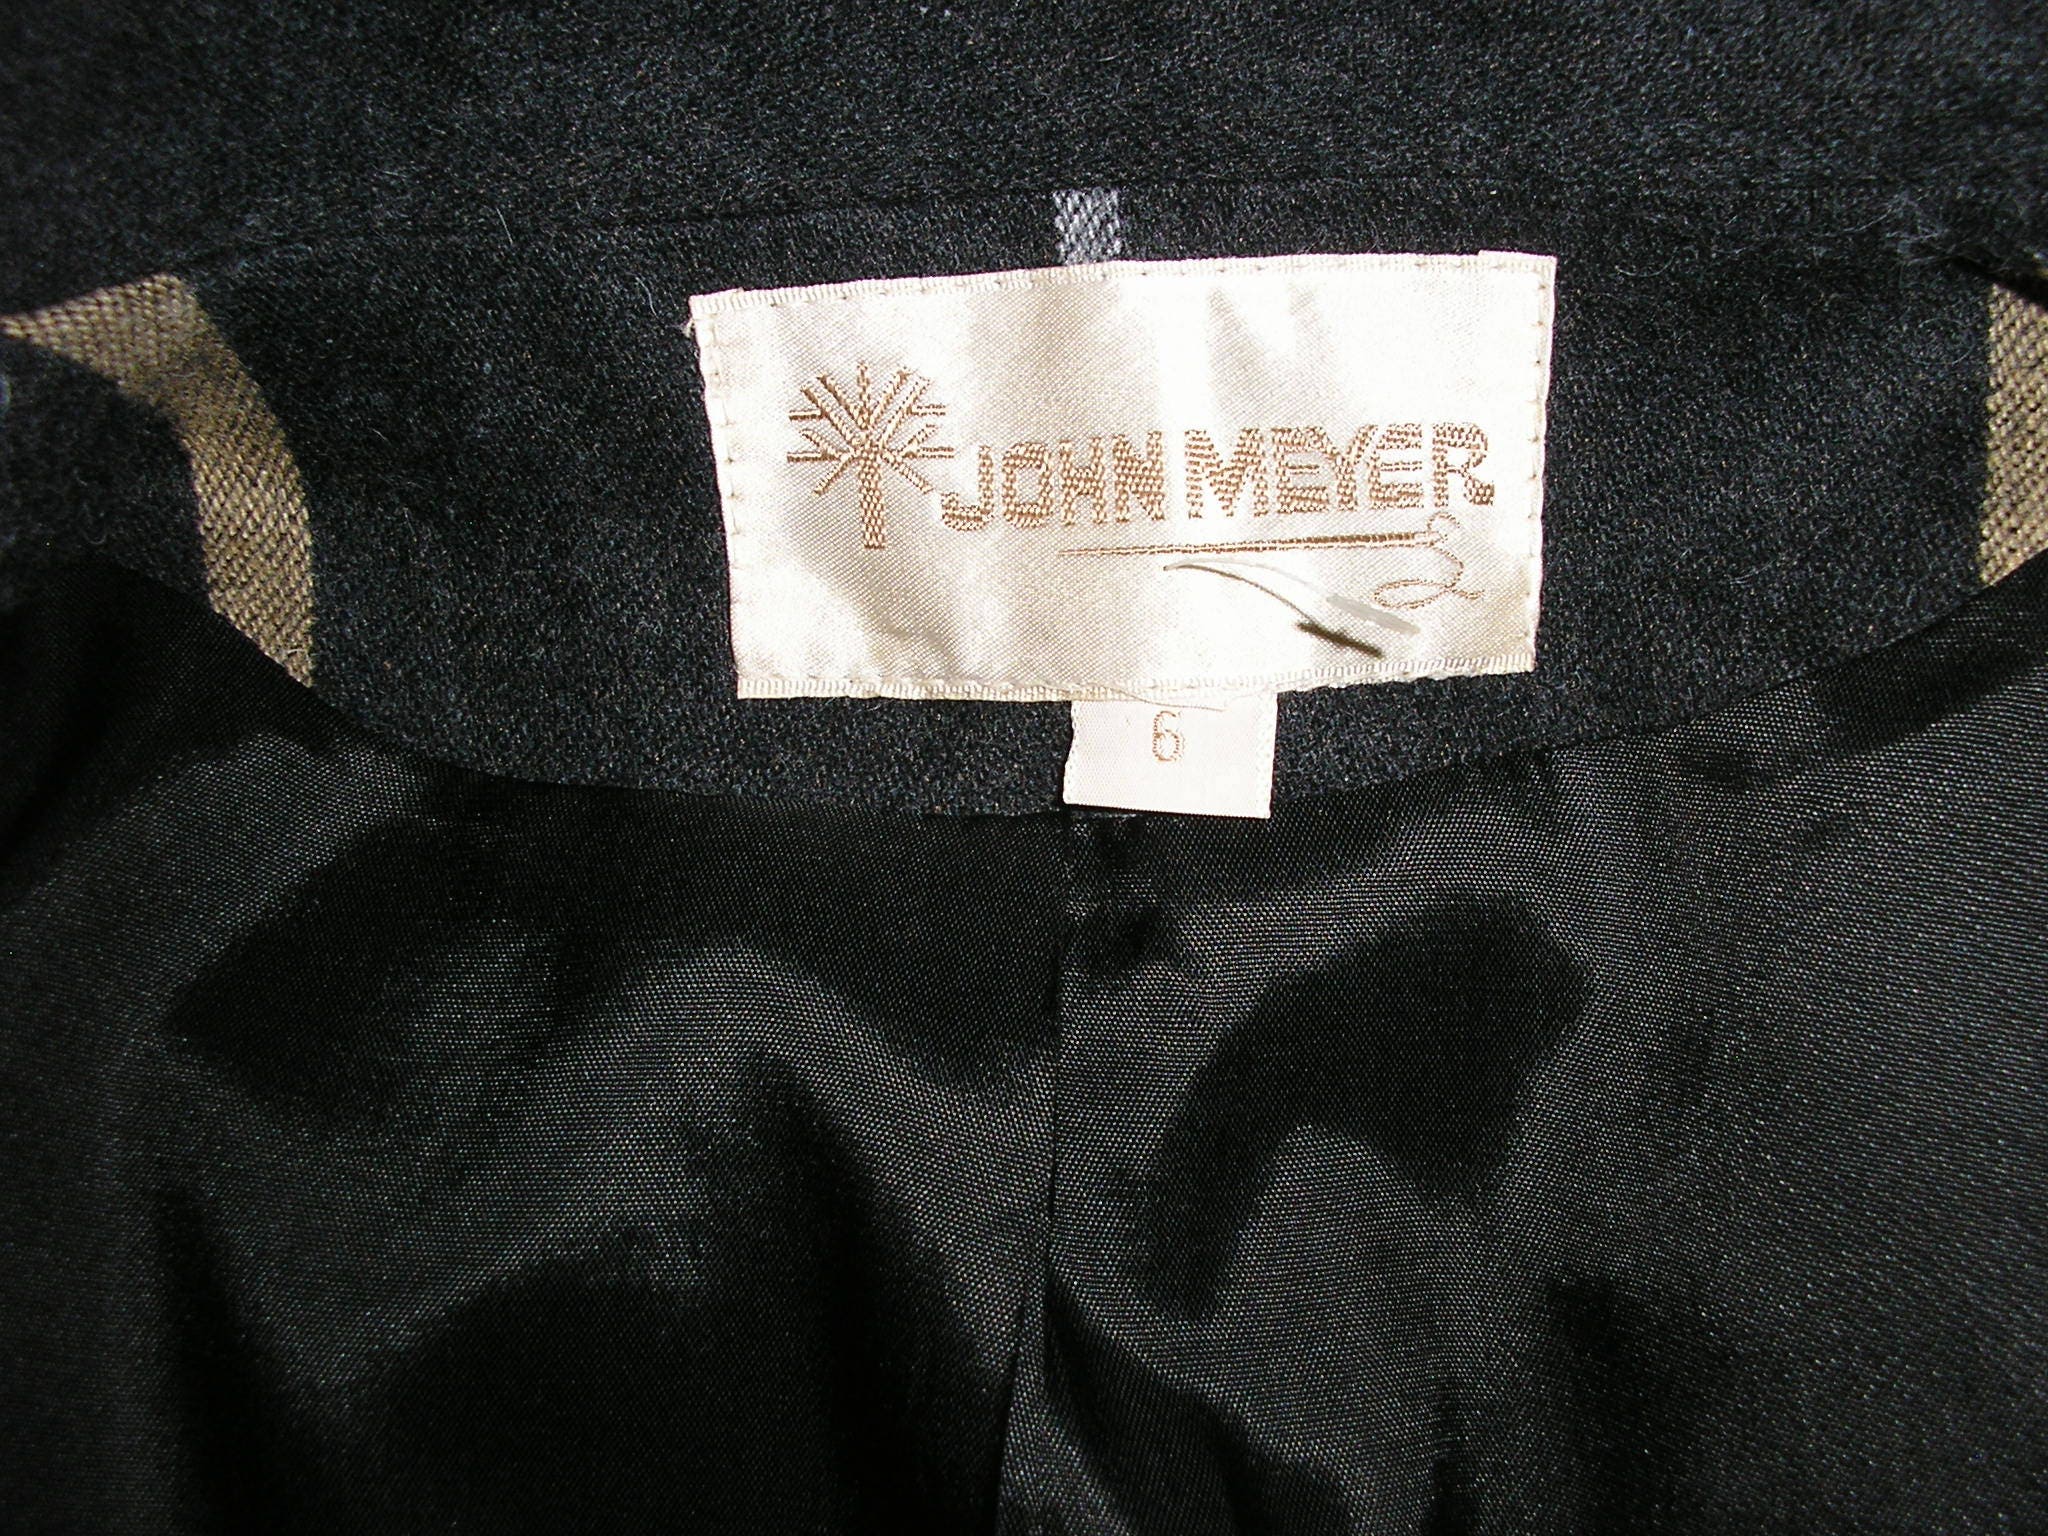 Vintage 70s Gray Wool Striped Jacket Blazer by John - Etsy